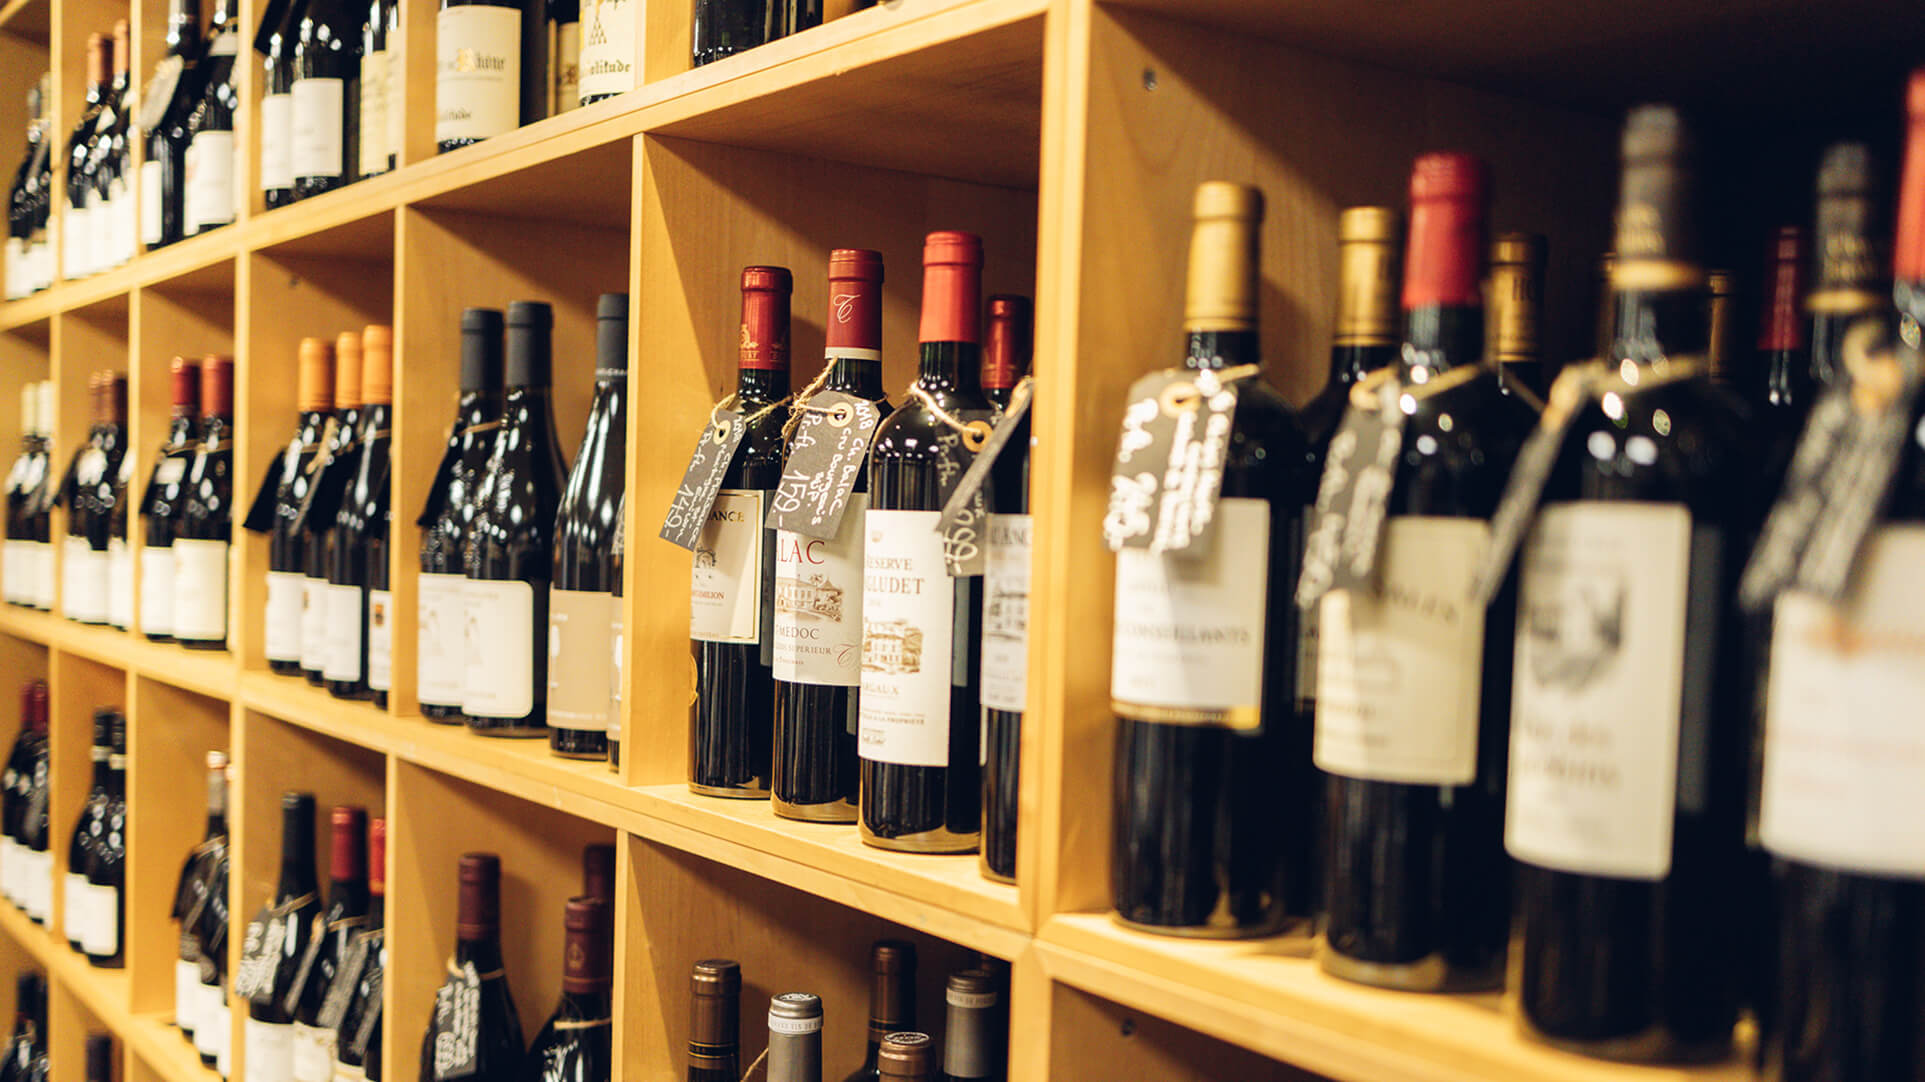 kassesystem til vinhandlere